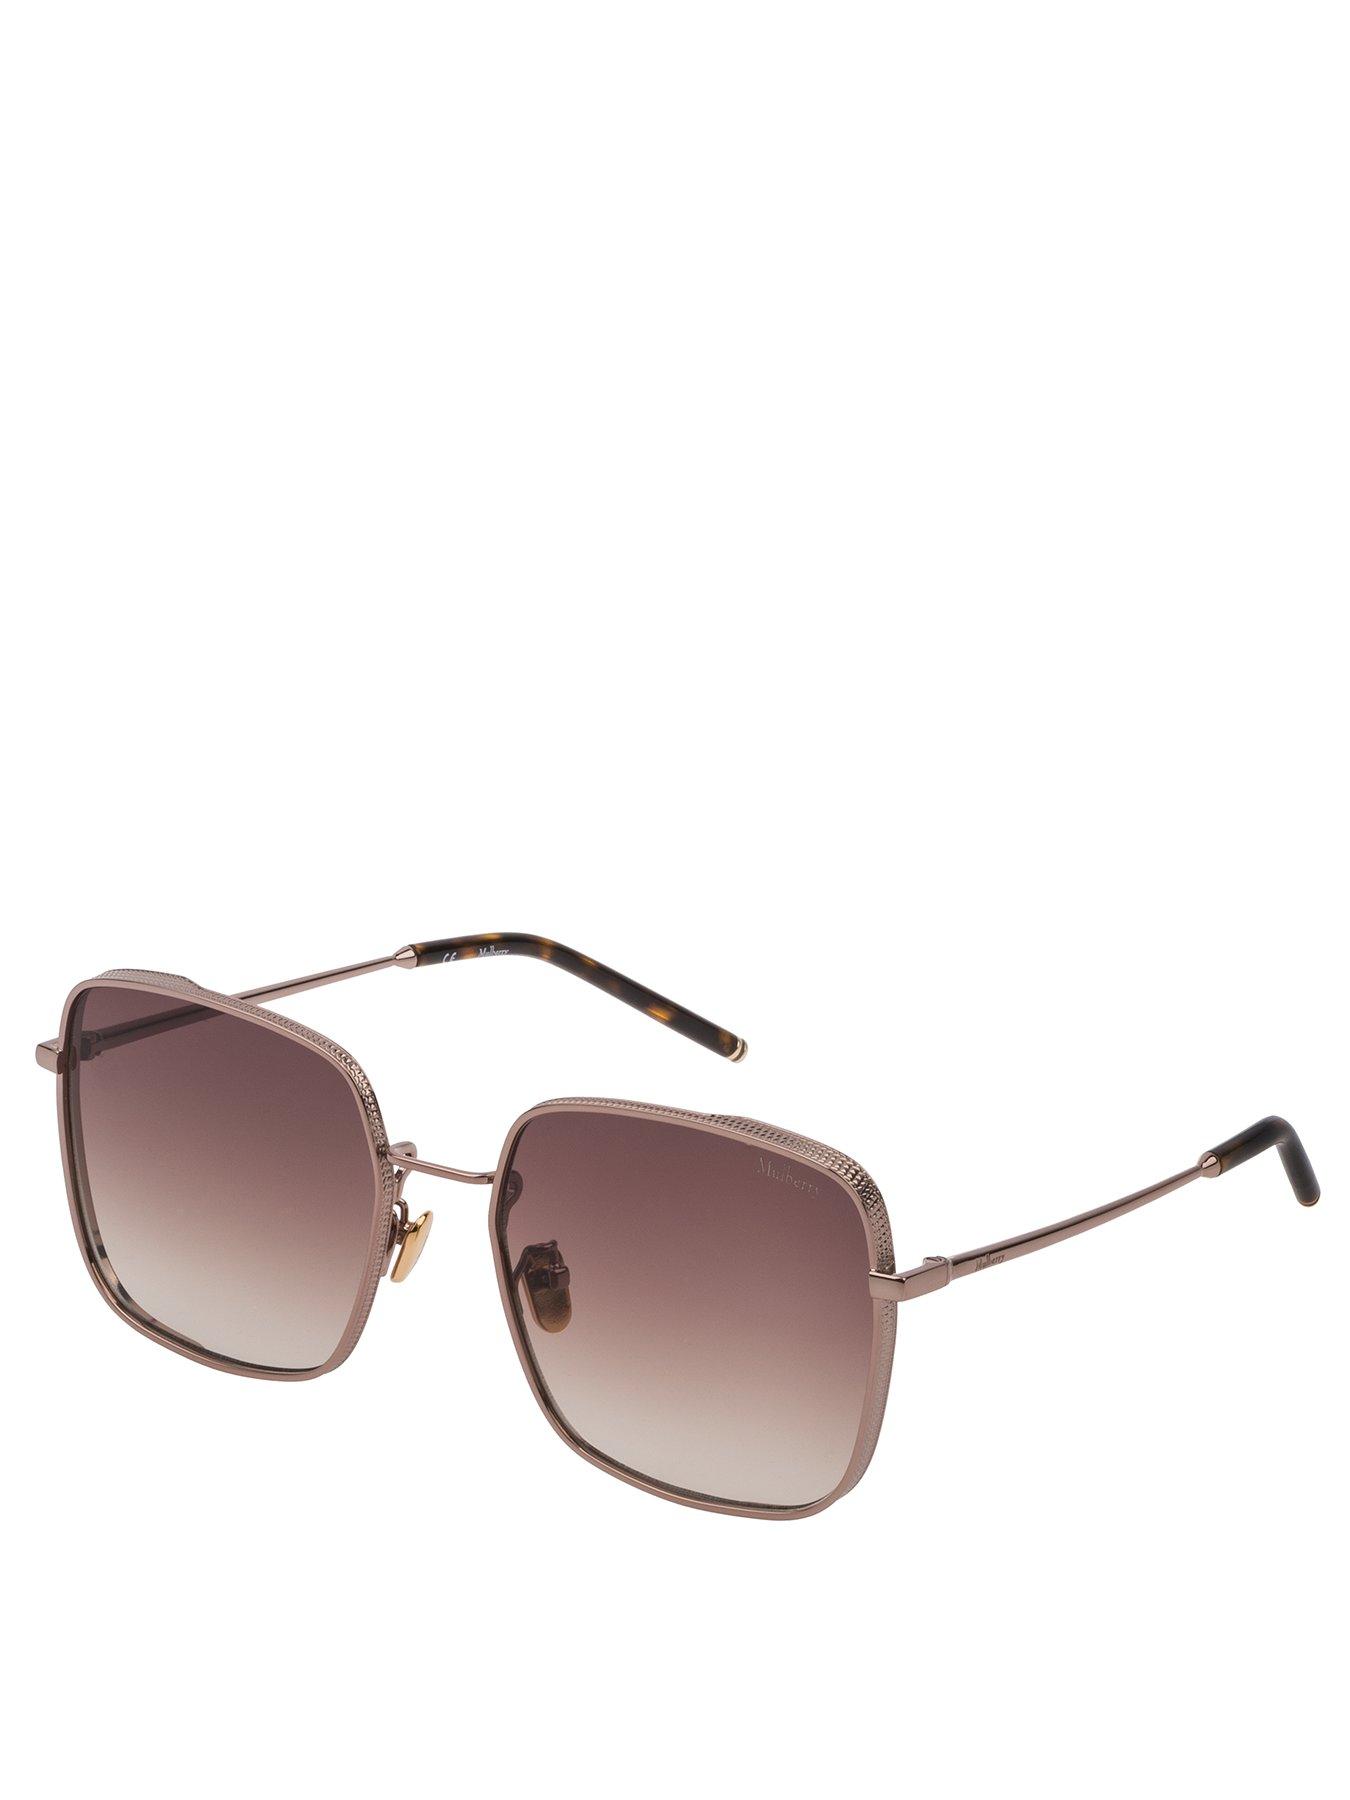 Accessories Square Sunglasses - Pink